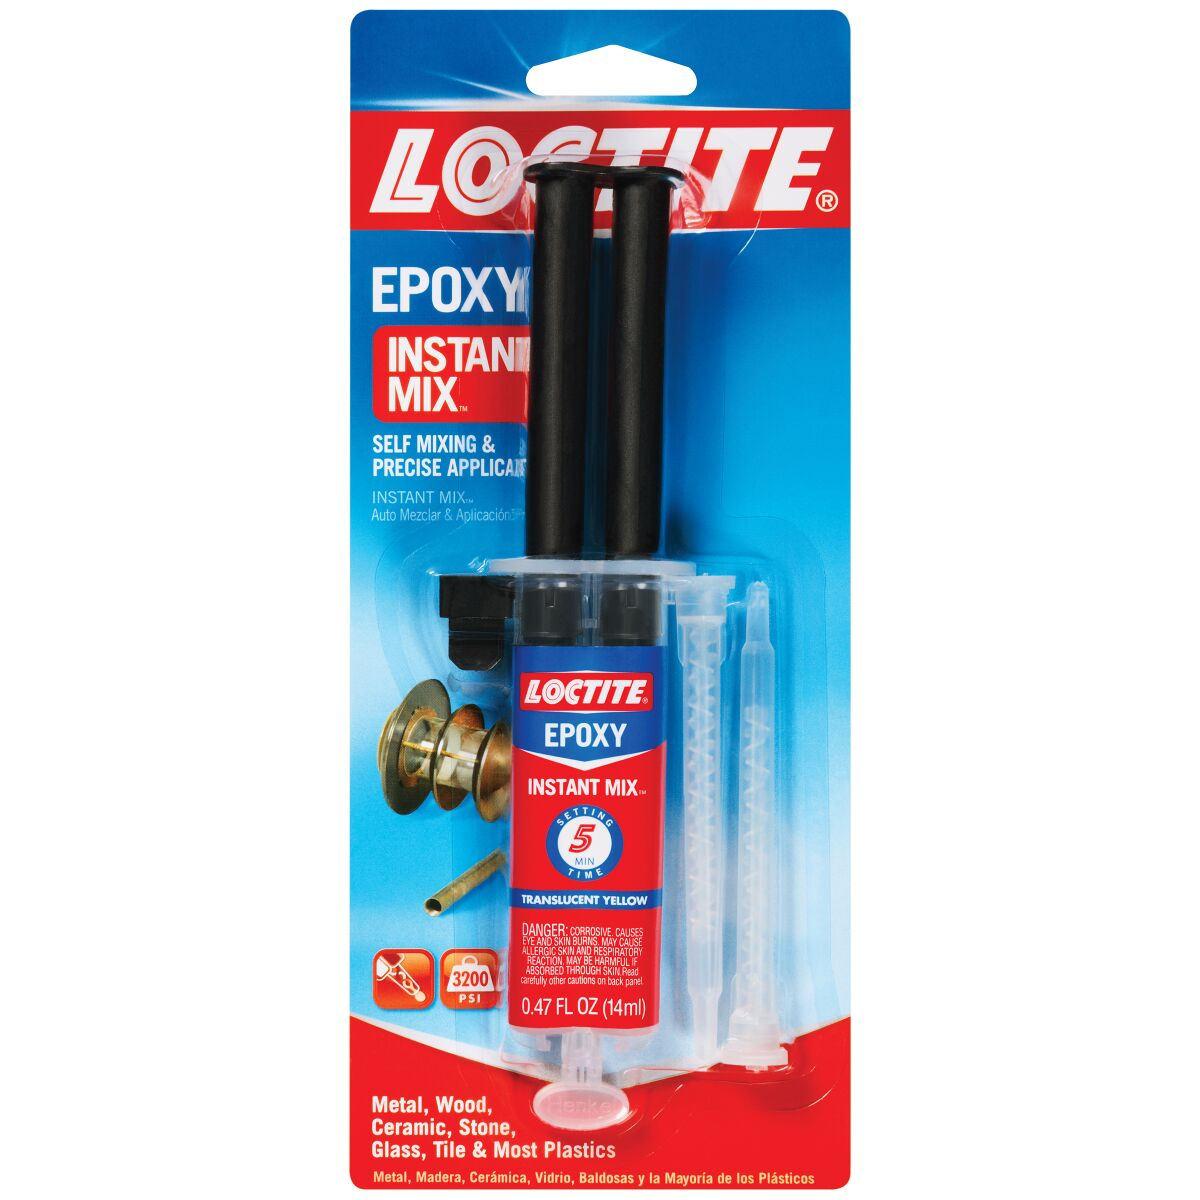 Loctite Epoxy Instant Mix 5 Minute